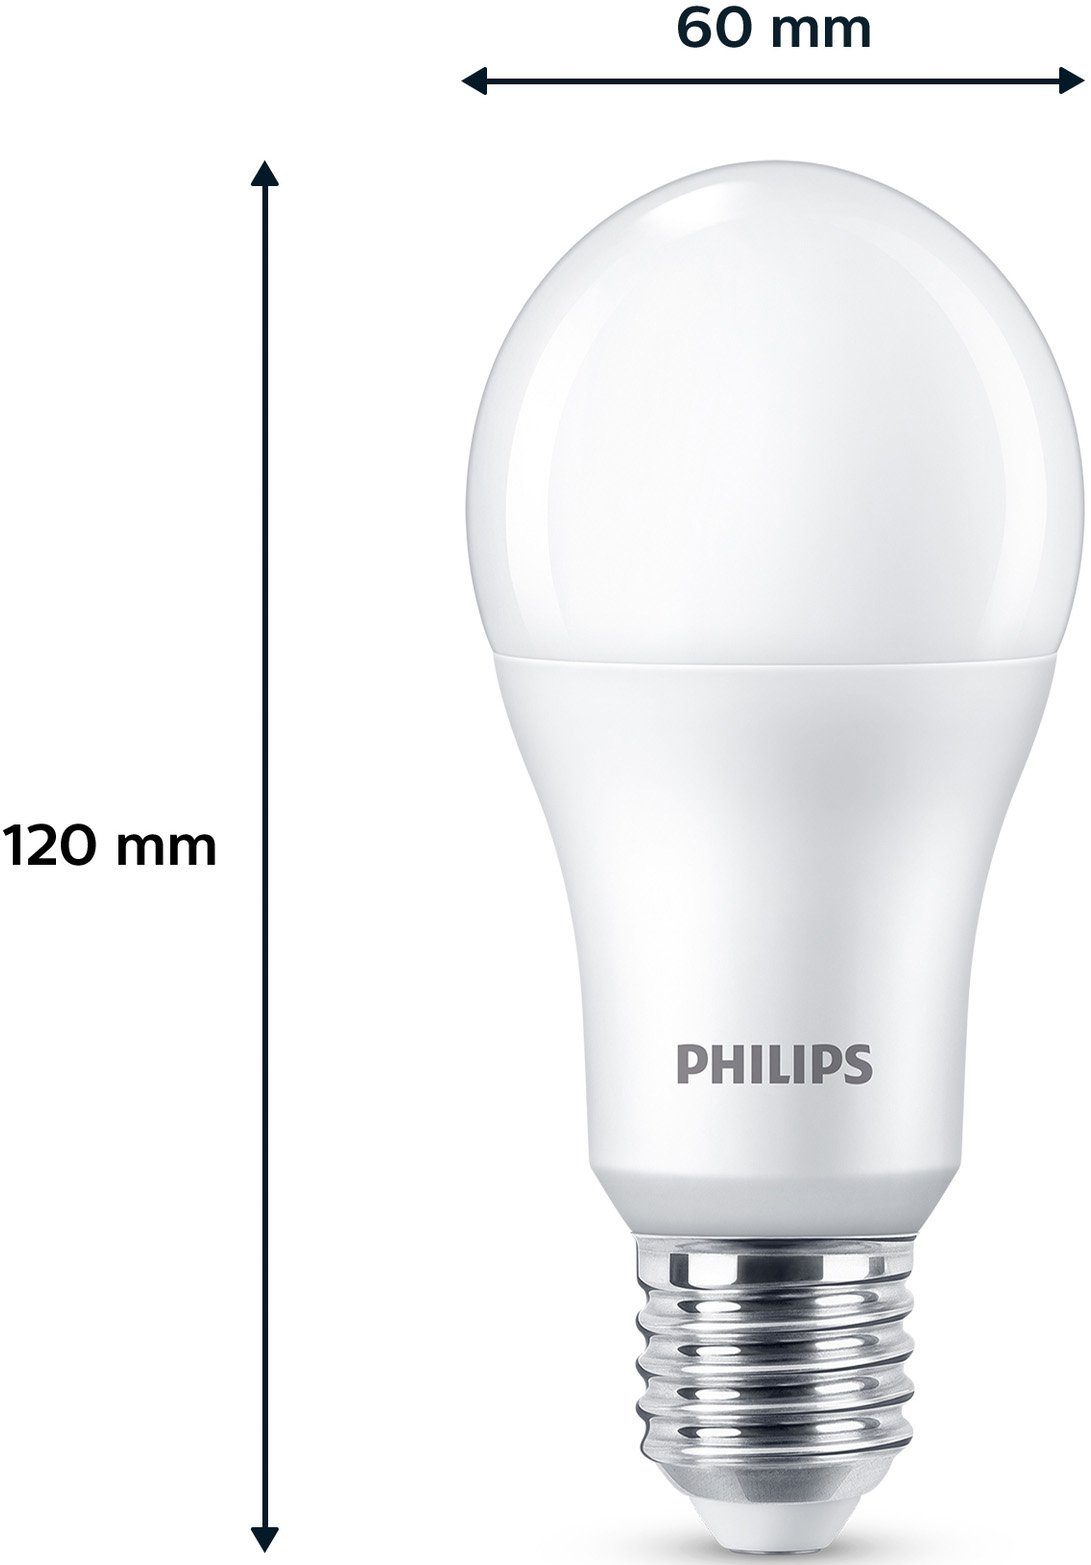 LED-Leuchtmittel P, 100W Warmweiß classic matt E27, Philips LED 3er Lampe 1521lm Warmweiß E27